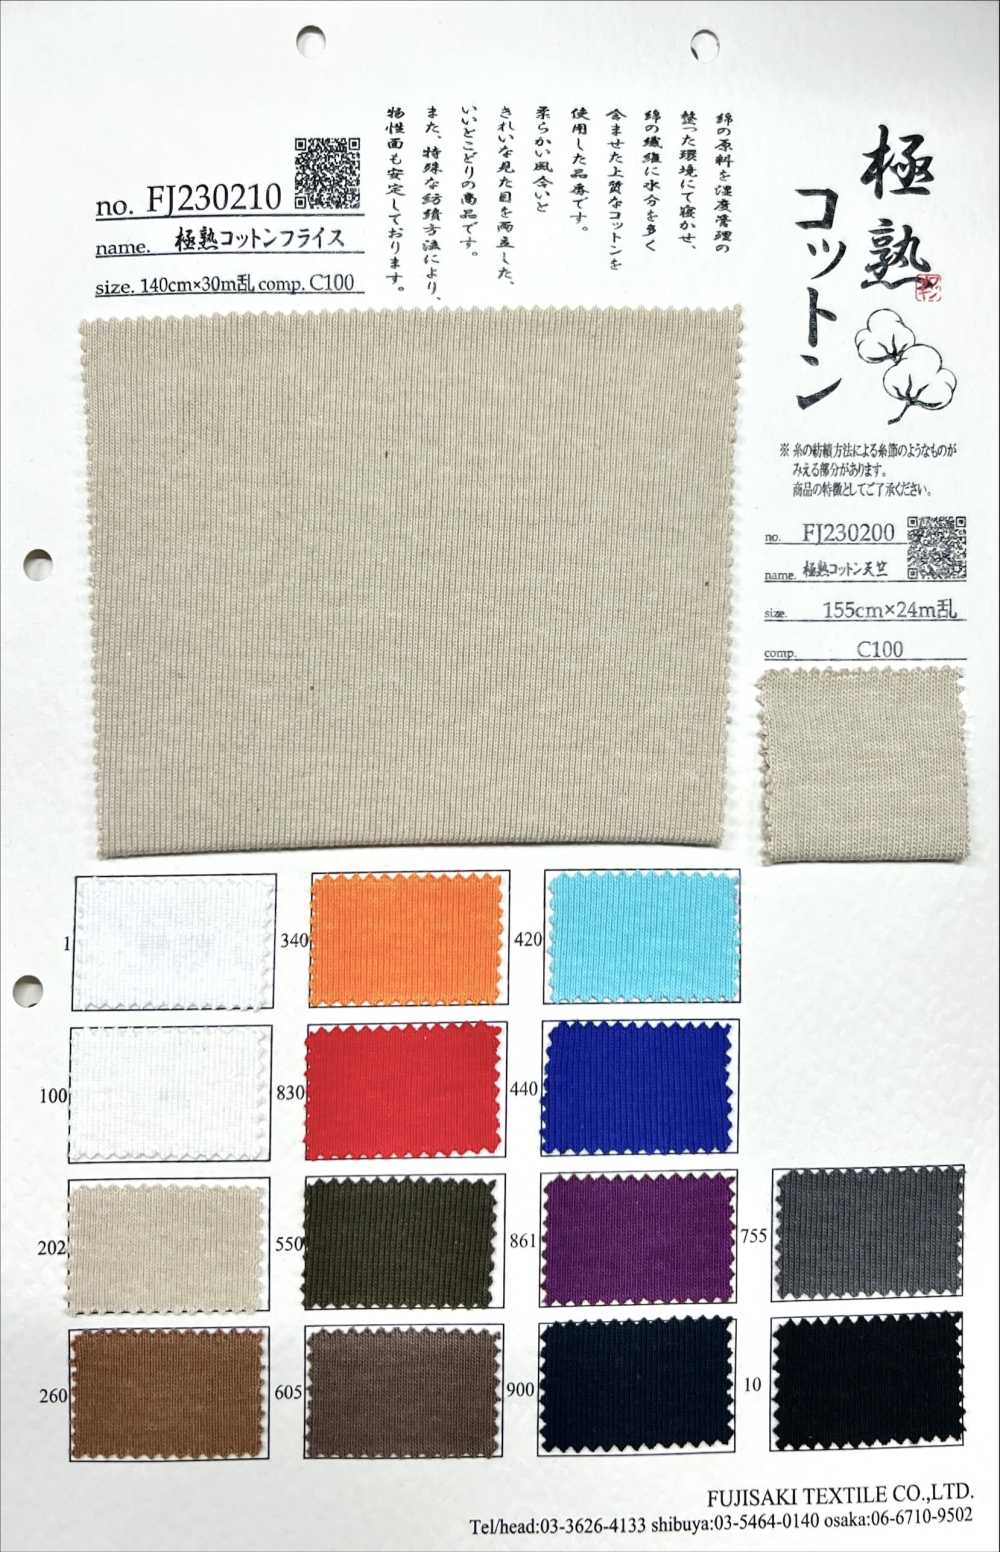 FJ230210 Extrem Reife Rundrippe Aus Baumwolle[Textilgewebe] Fujisaki Textile